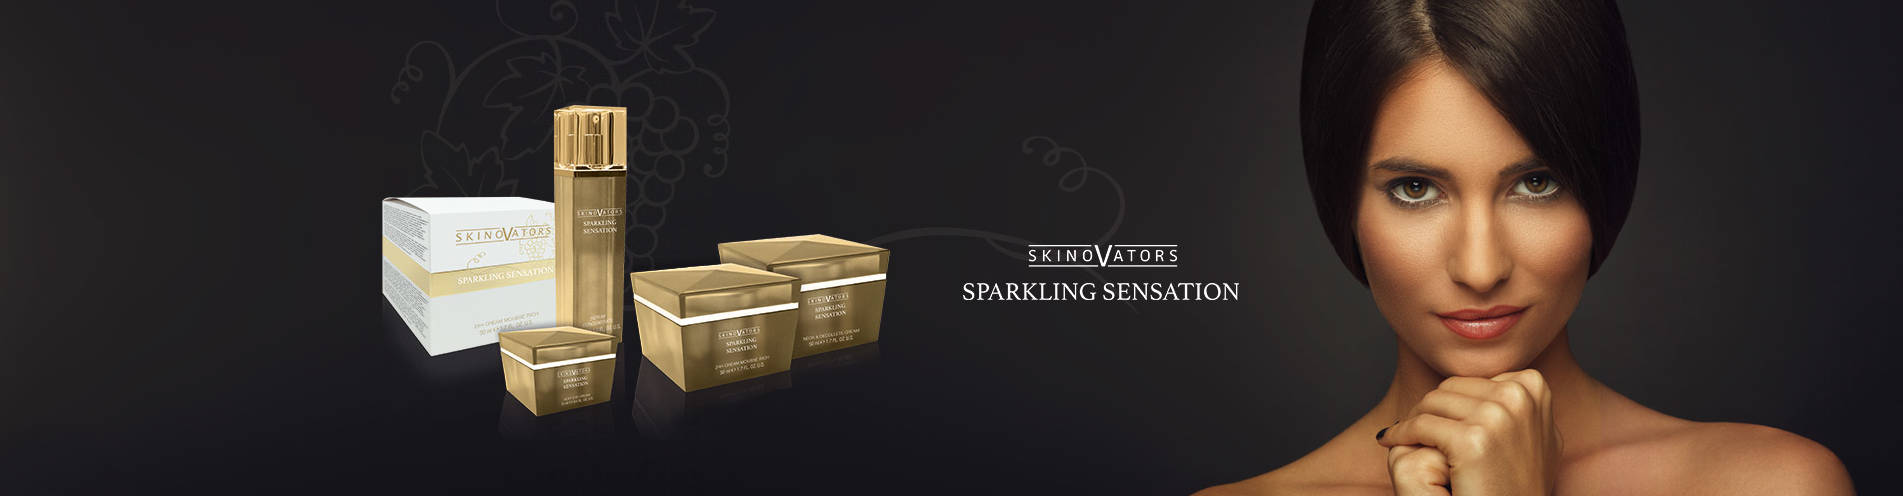 Your brand name or label on sparkling sensation Private Label Cosmetics German Manufacturer